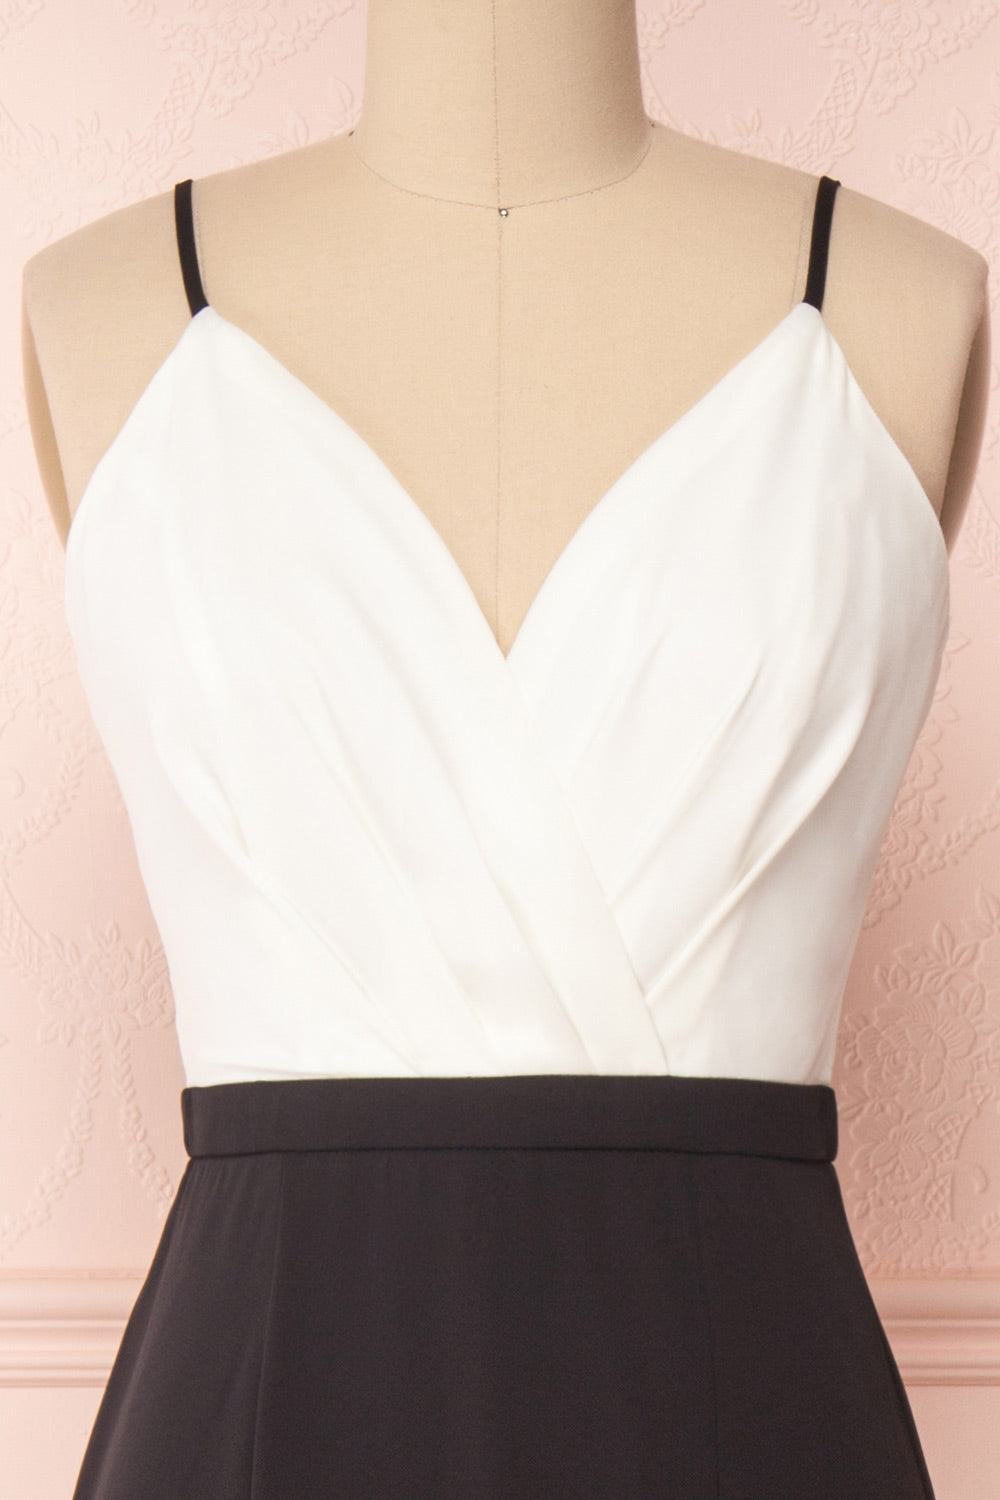 Adriadne Black & White Mermaid Maxi Prom Dress | Boutique 1861 2